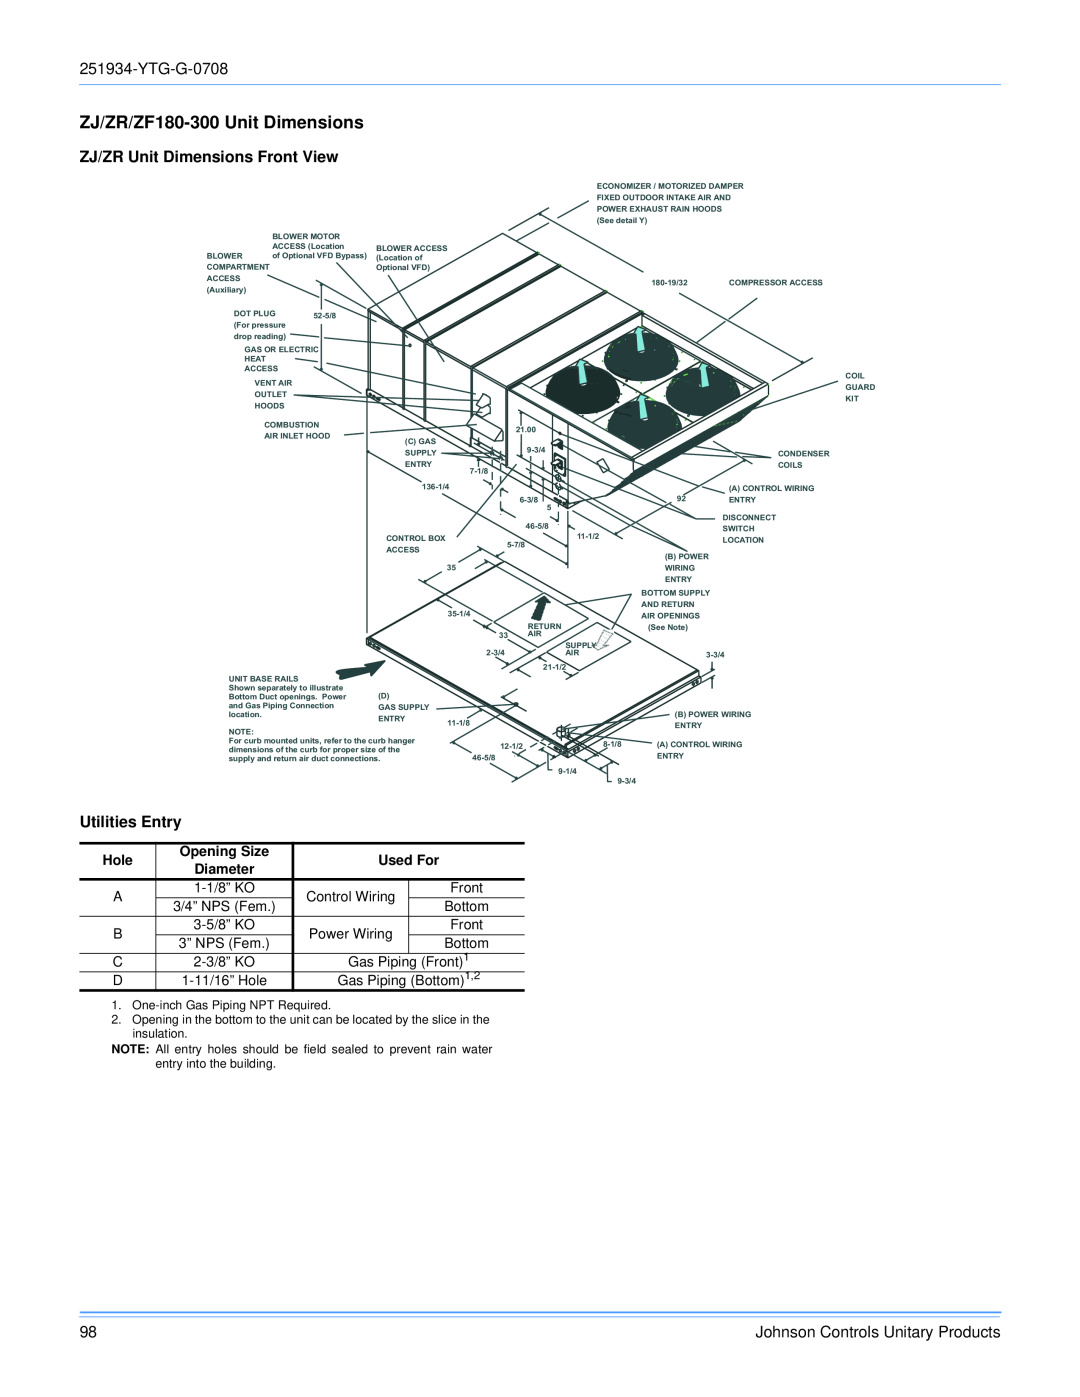 York R-410A manual ZJ/ZR/ZF180-300Unit Dimensions, ZJ/ZR Unit Dimensions Front View, Utilities Entry 